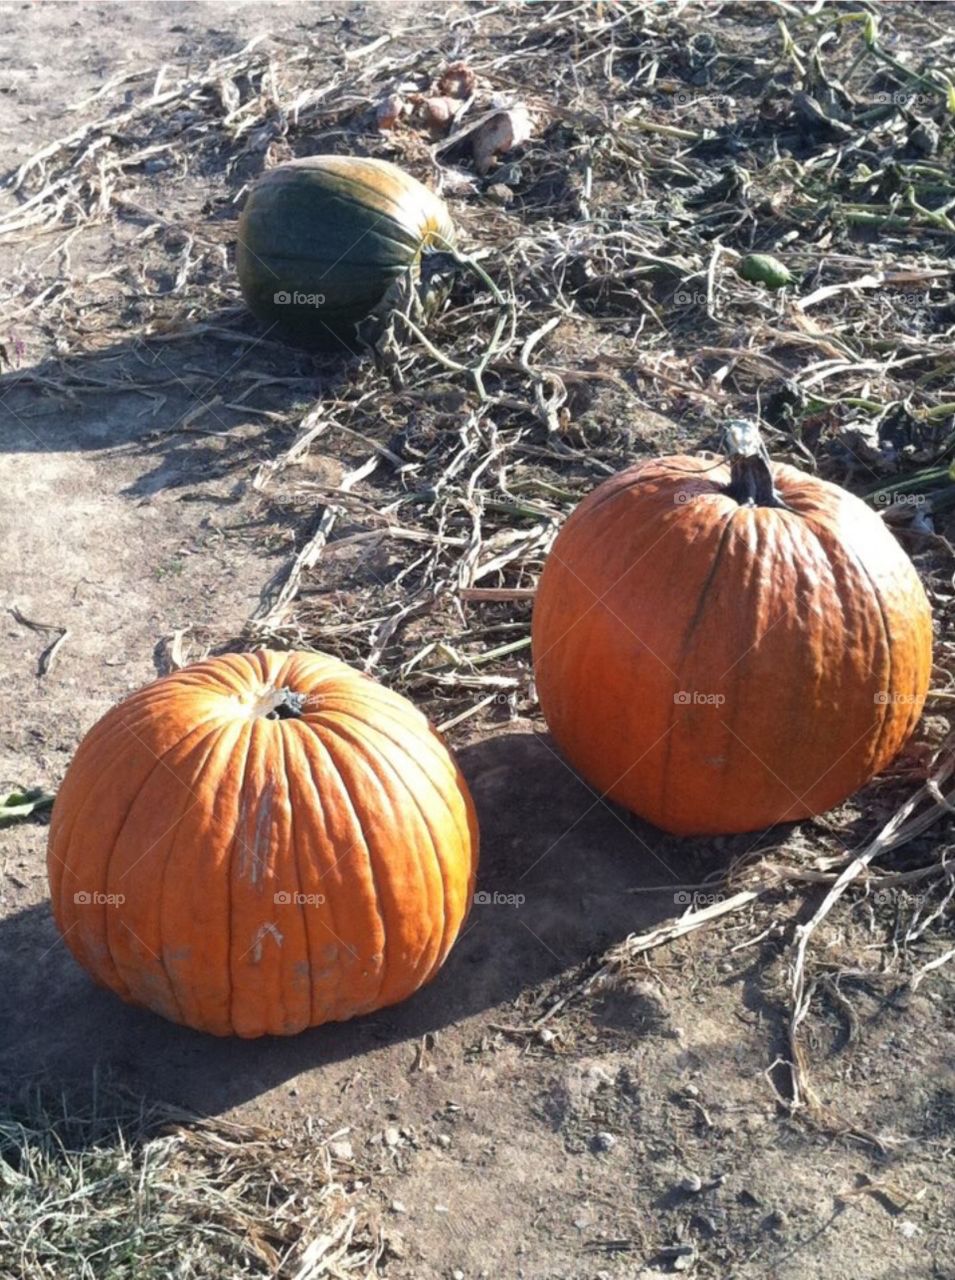 Pumpkins . Natural lighting captured on pumpkins in the patch. 